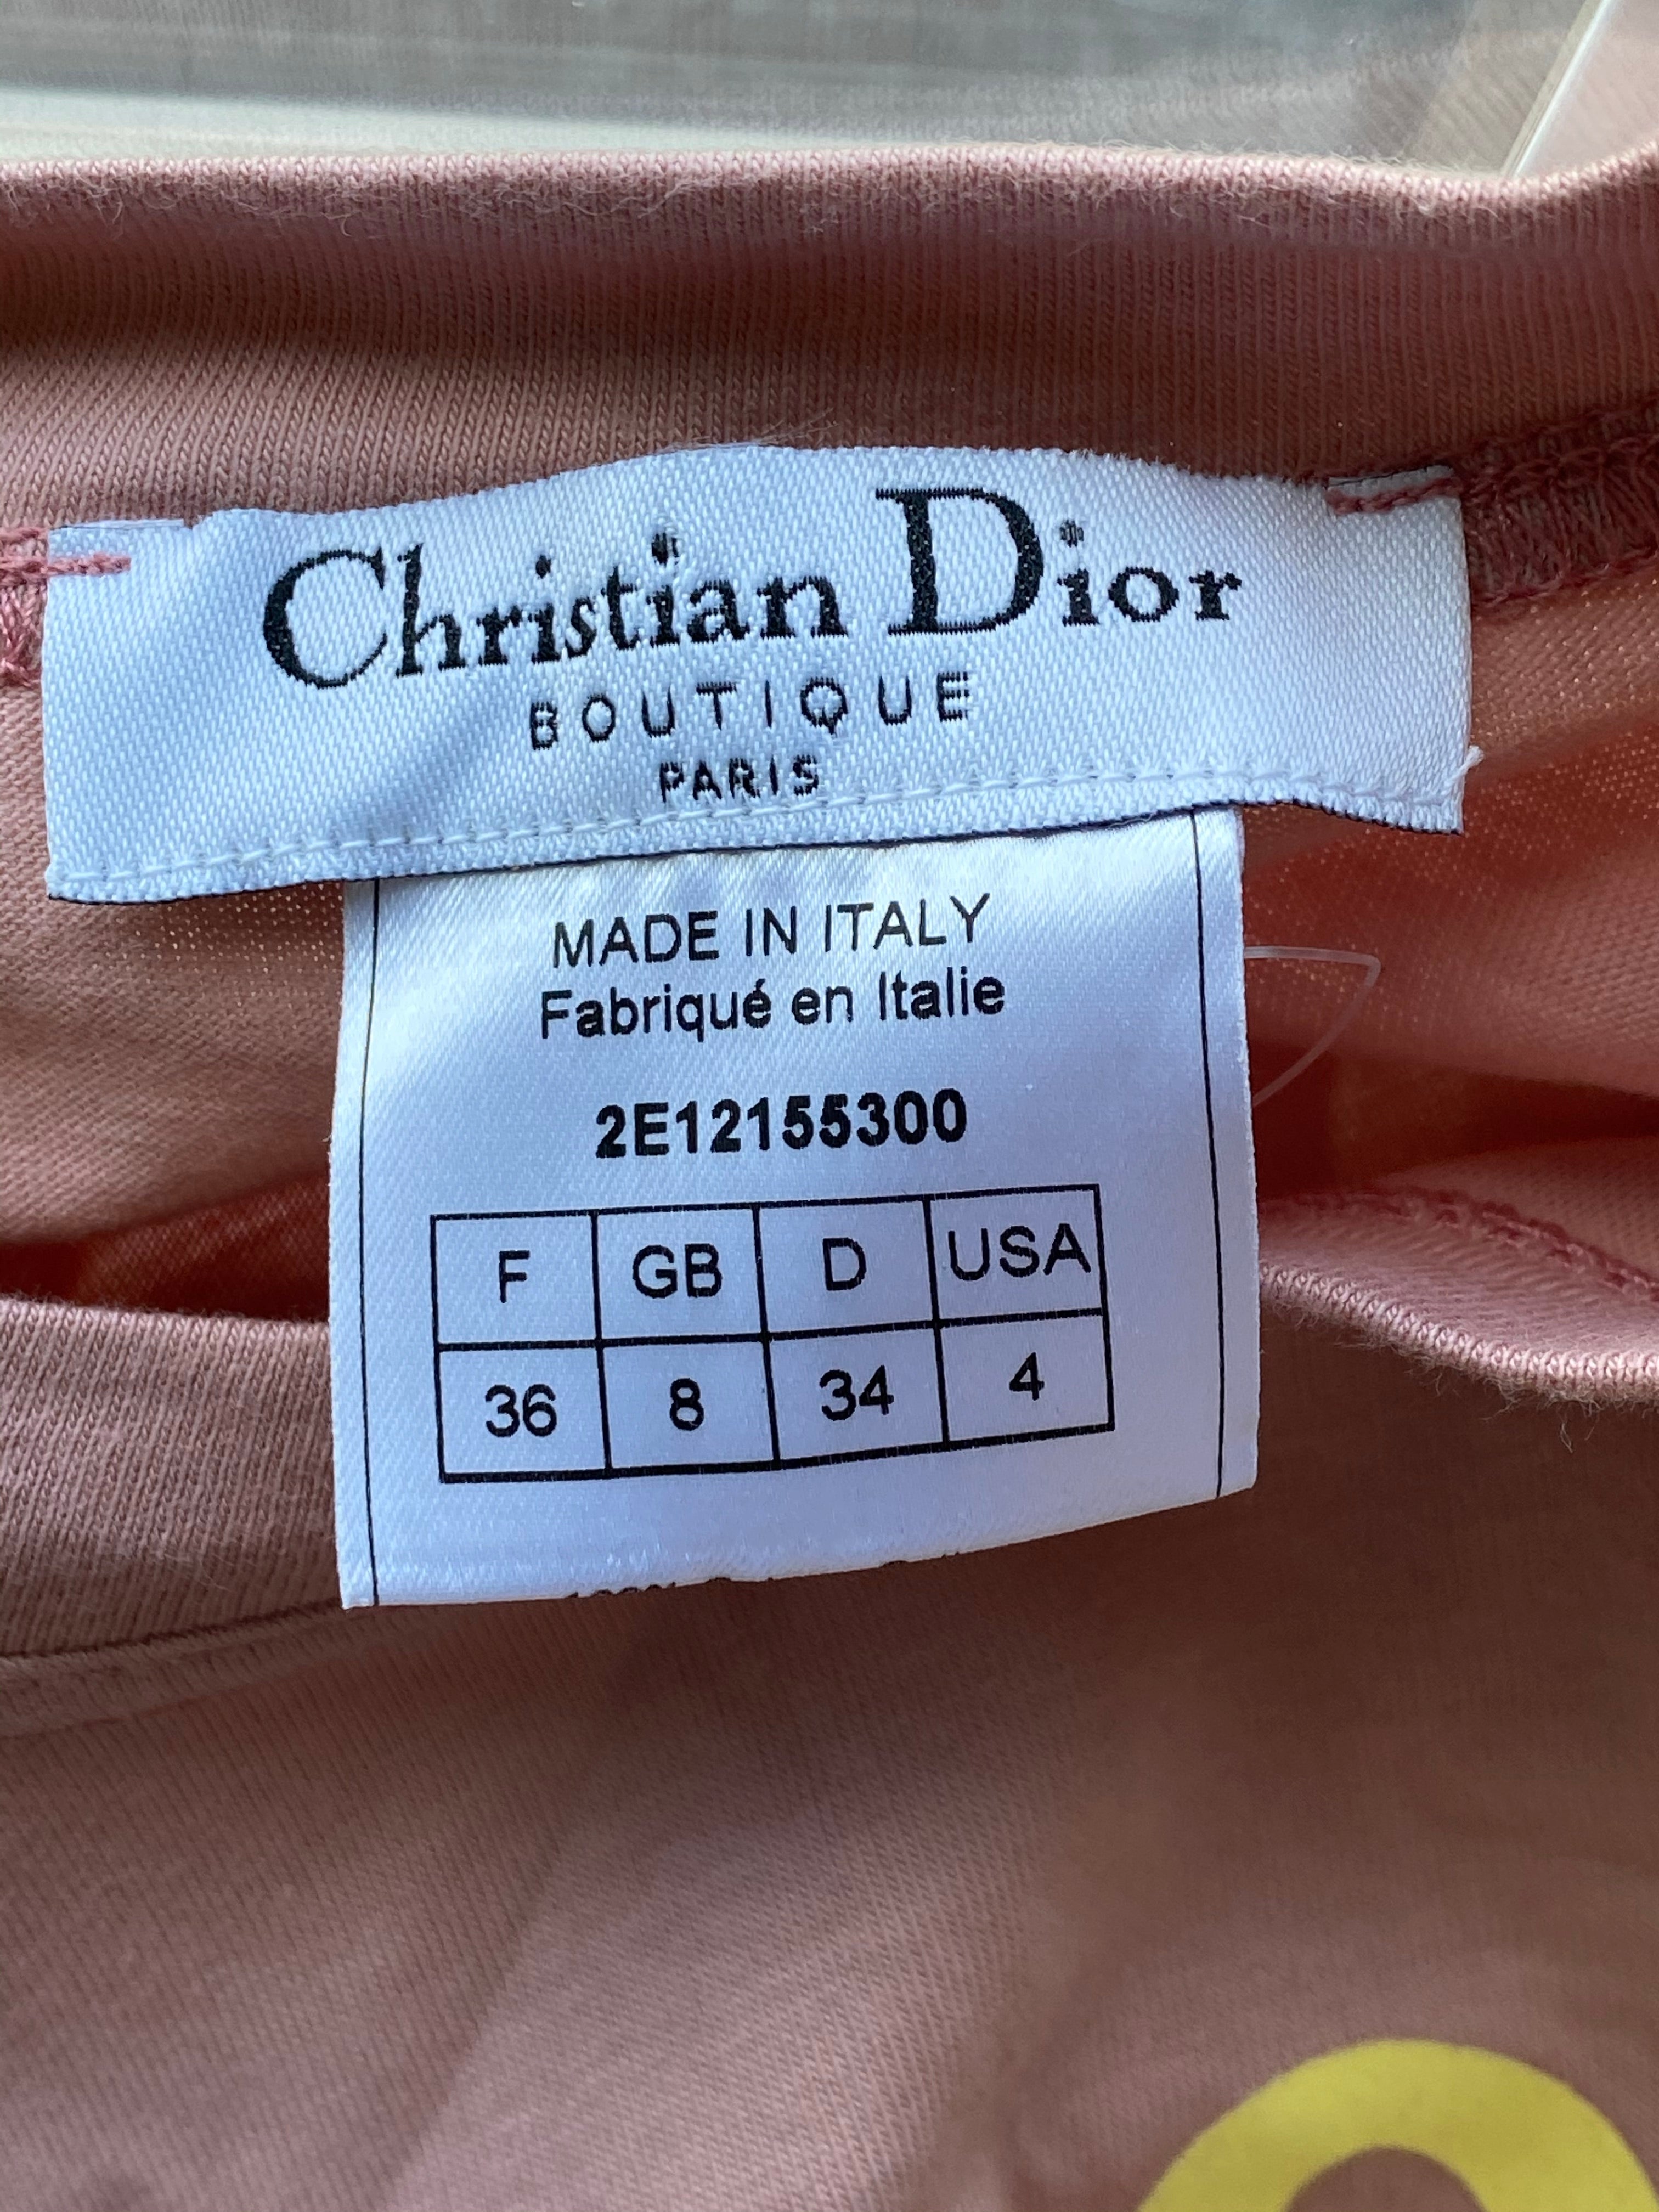 Dior J’adore Light Pink and Yellow Logo Top